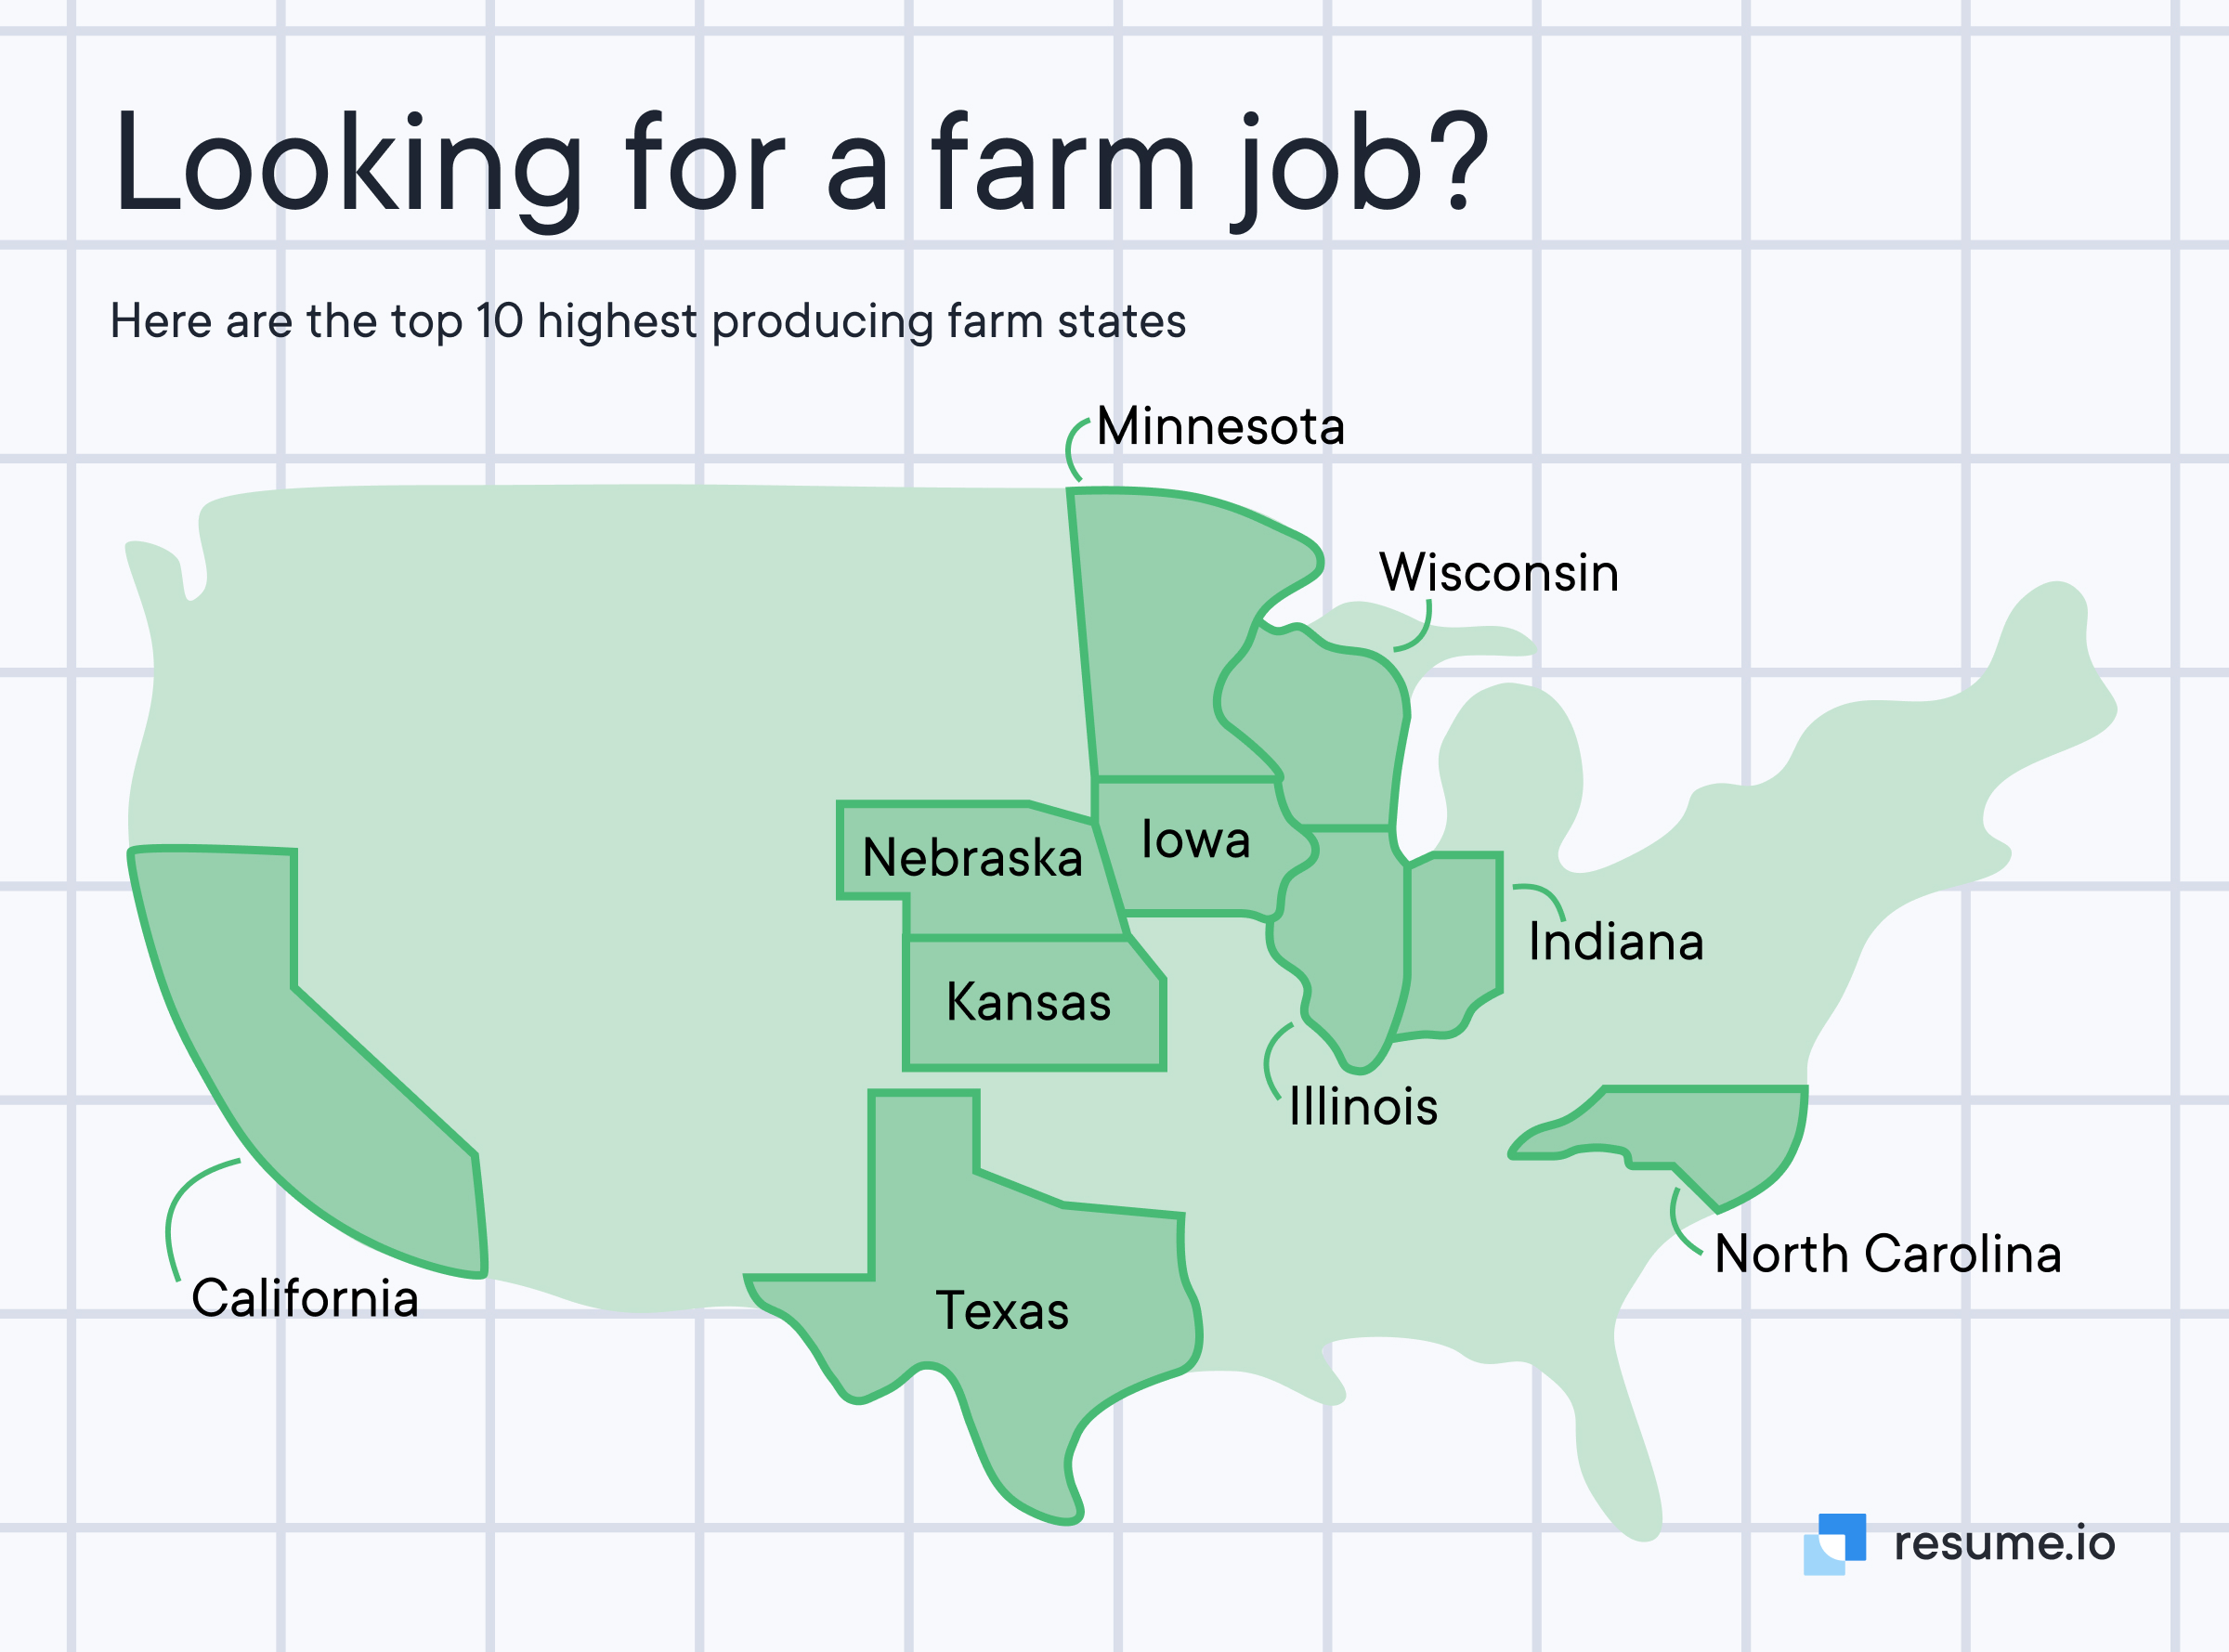 The top 10 highest producing farm states are: California, Minnesota, Texas, North Carolina, Kansas, Nebraska, Iowa, Indiana, Illinois and Wisconsin